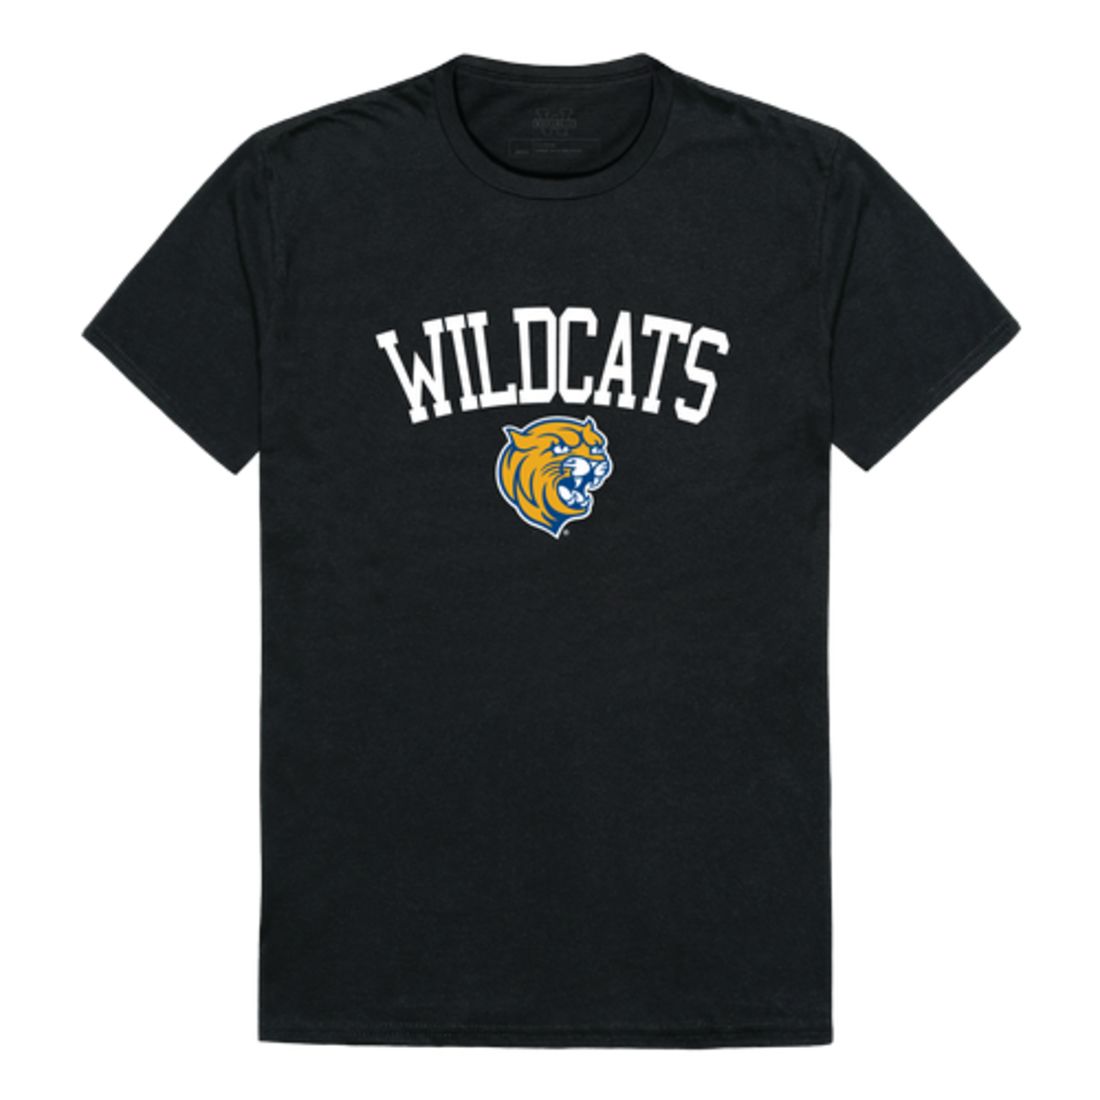 Johnson & Wales University Wildcats Arch T-Shirt Tee